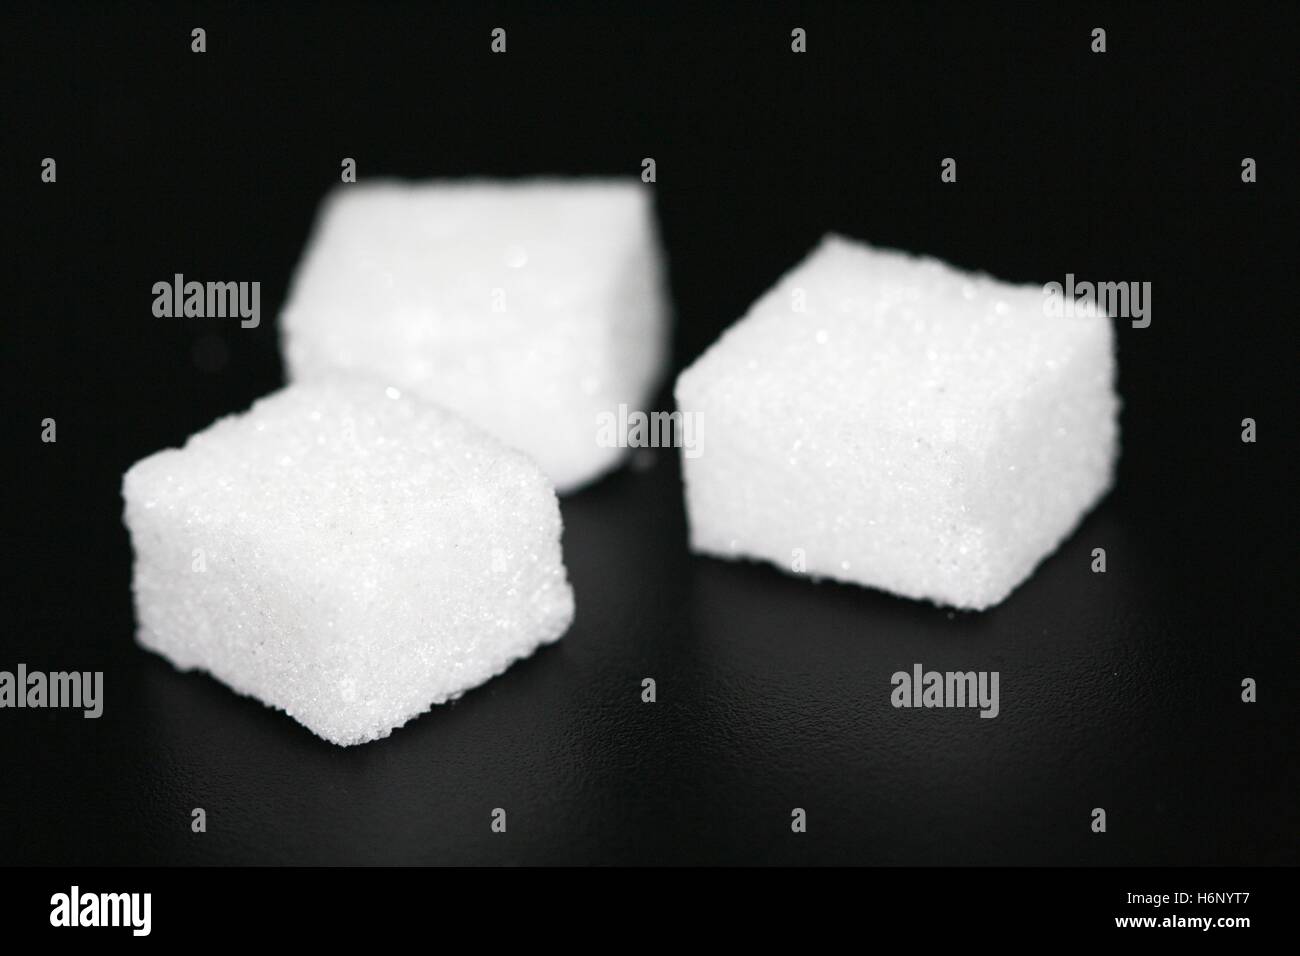 Sugar cubes Stock Photo - Alamy